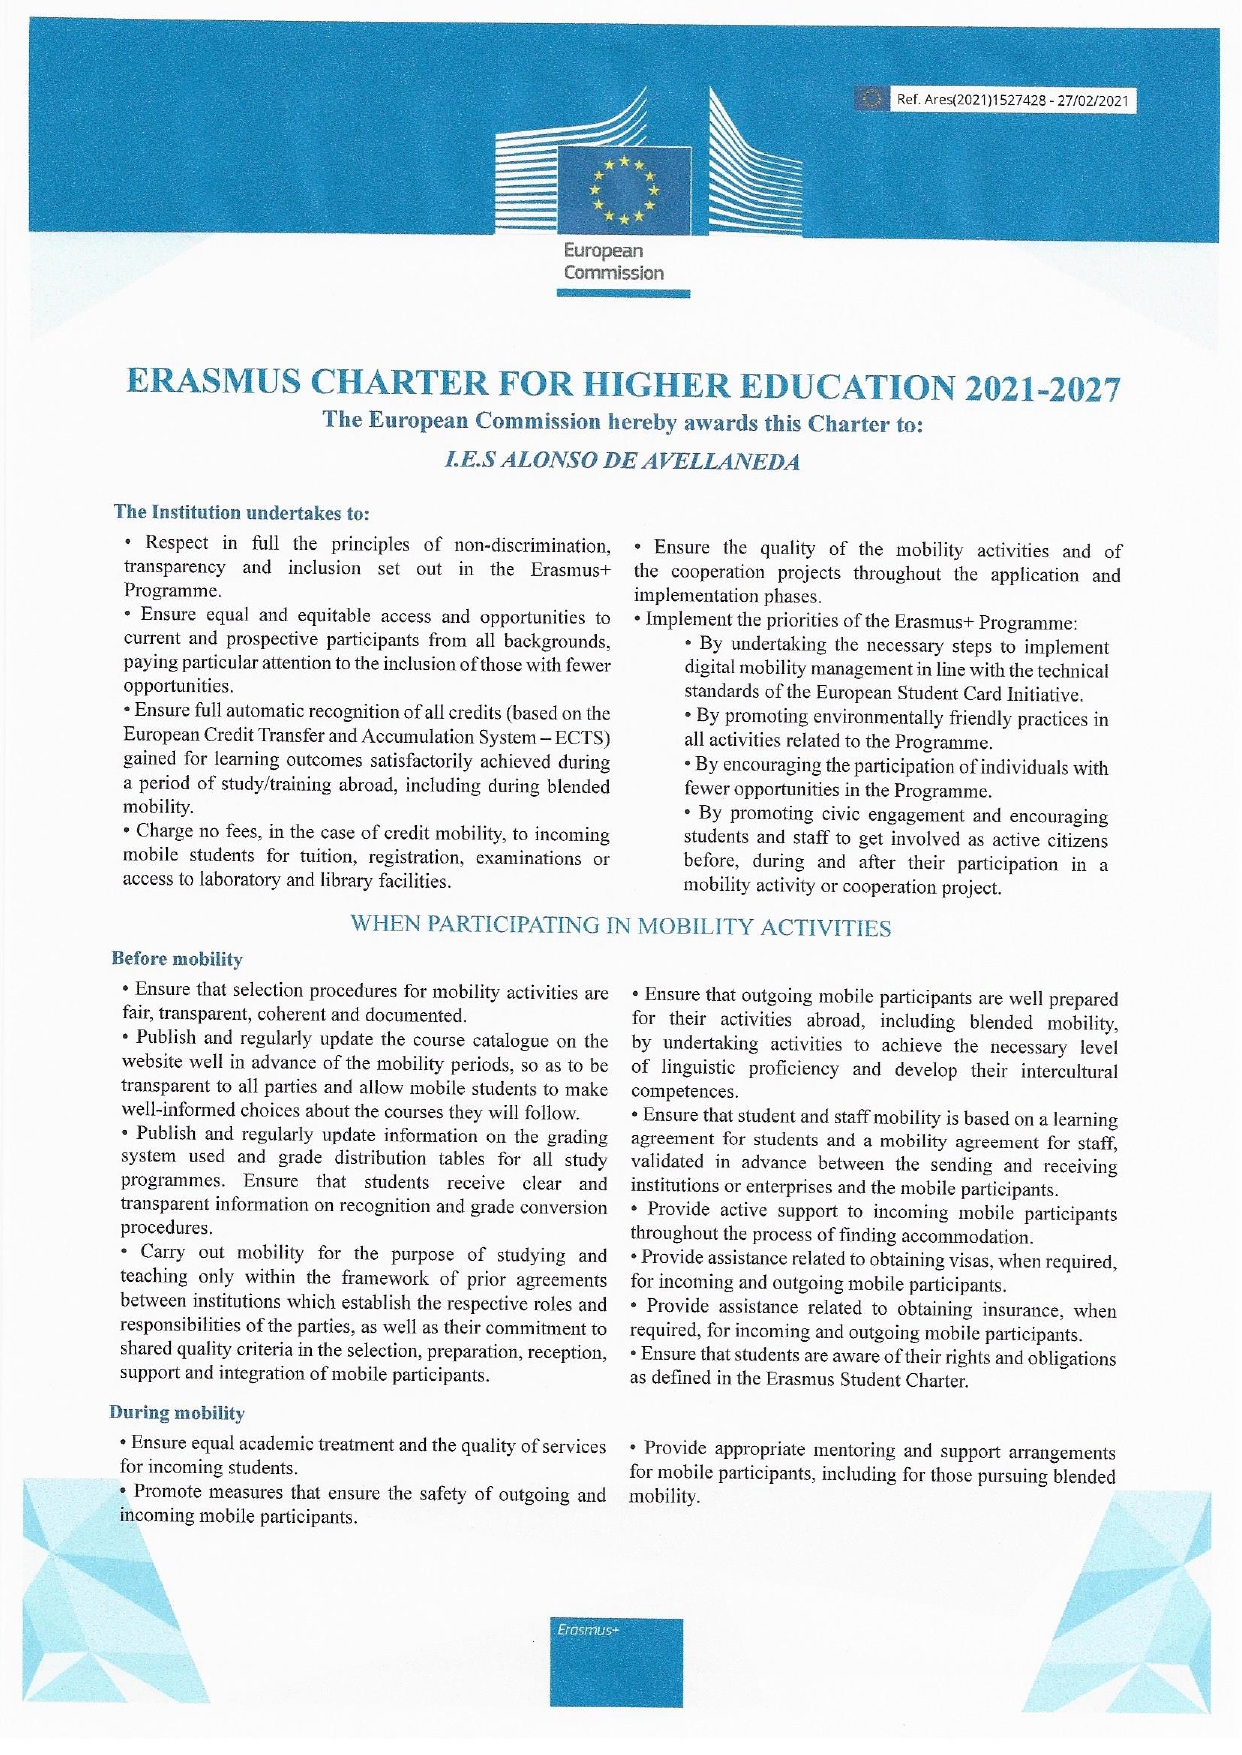 erasmus-charter-2021-2027/